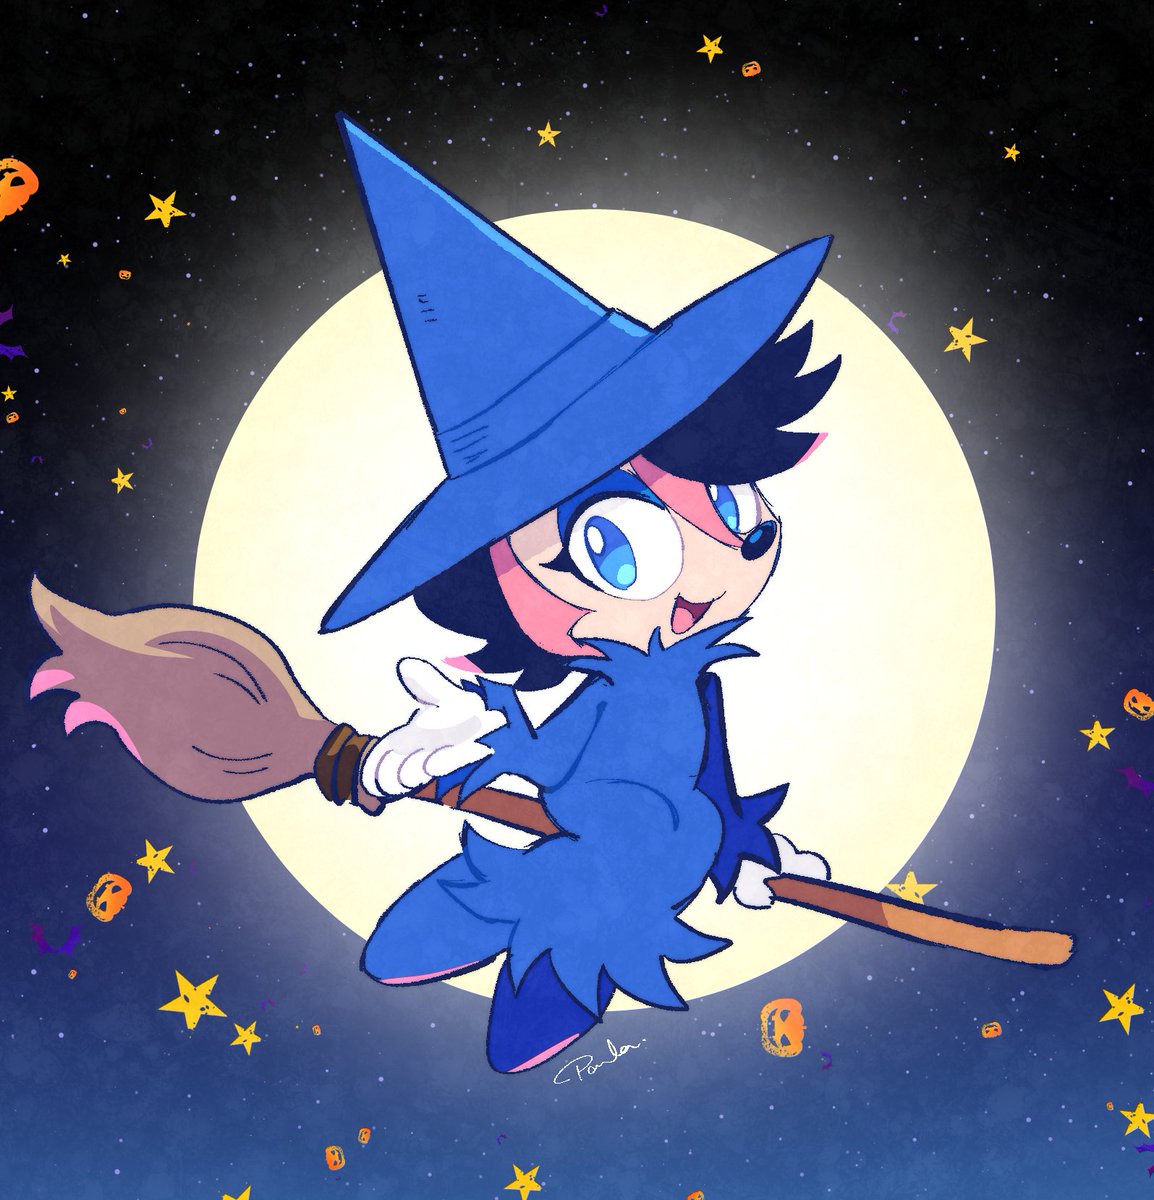 broom broom riding hat solo moon blue eyes smile  illustration images